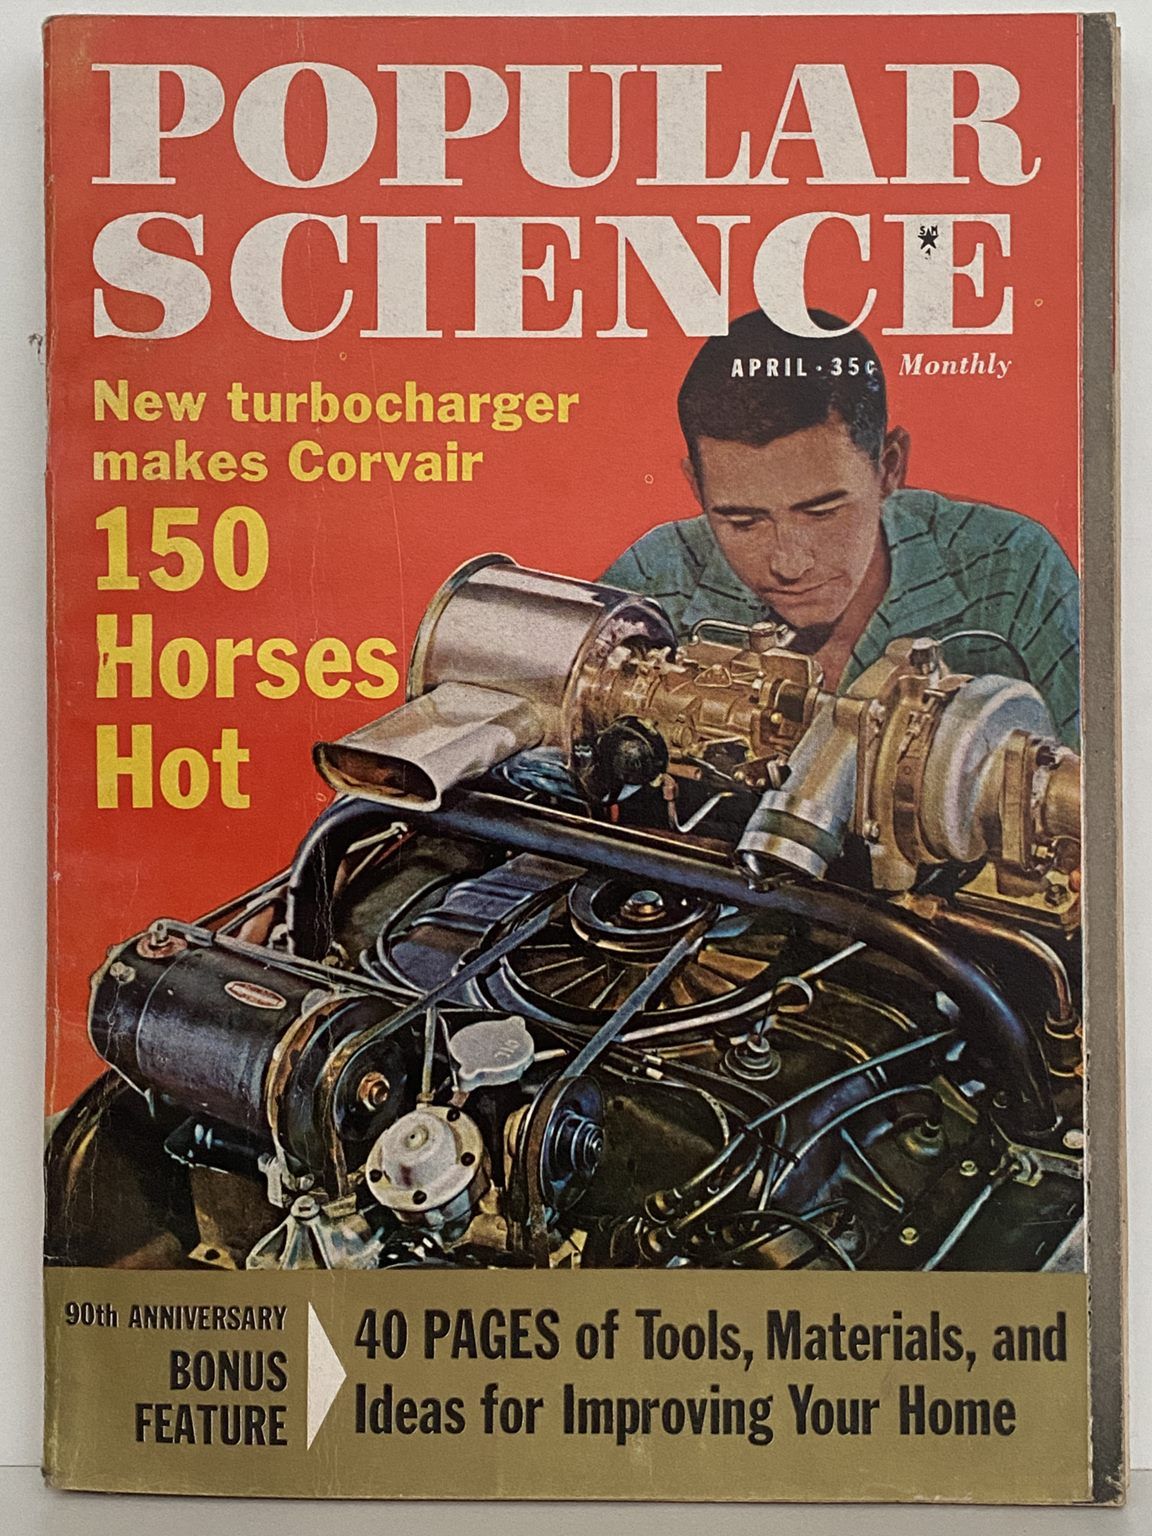 VINTAGE MAGAZINE: Popular Science, Vol. 180, No. 4 - April 1962